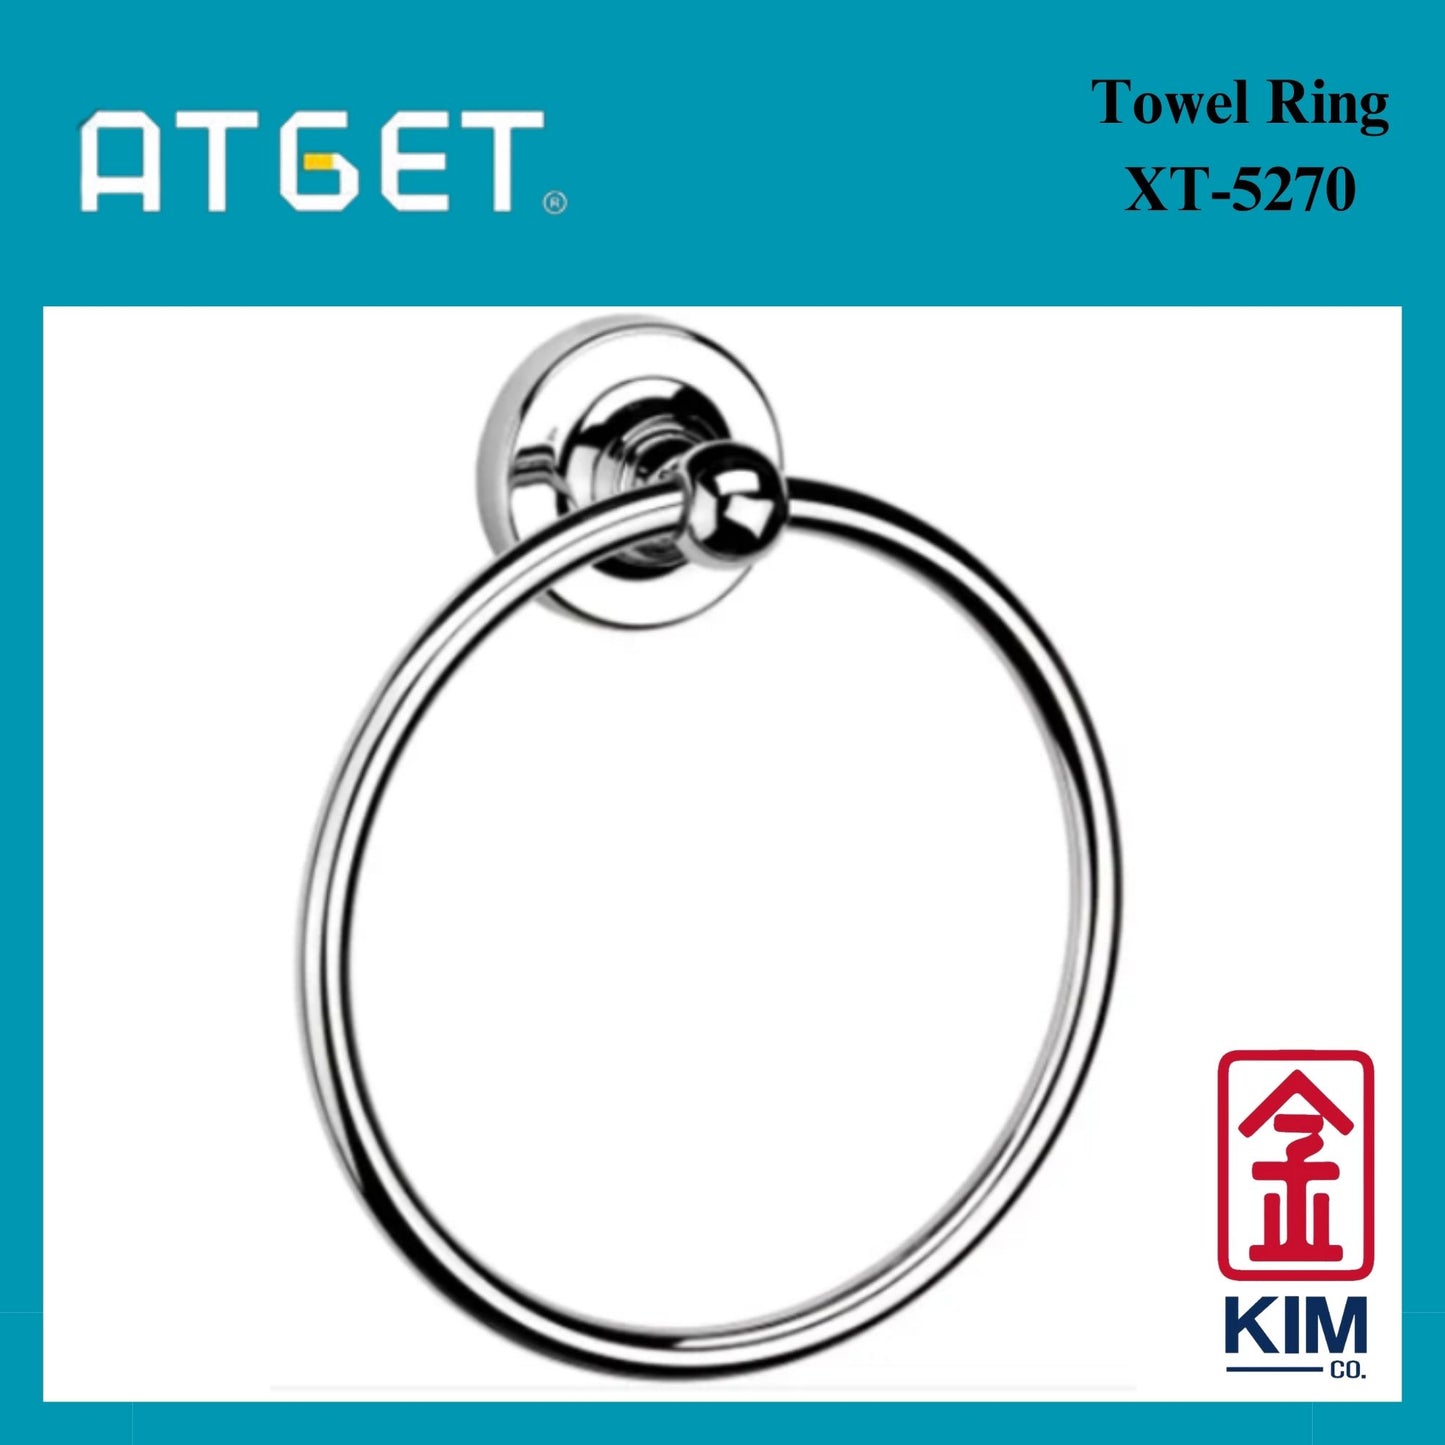 Atget Towel Ring (XT-5270)